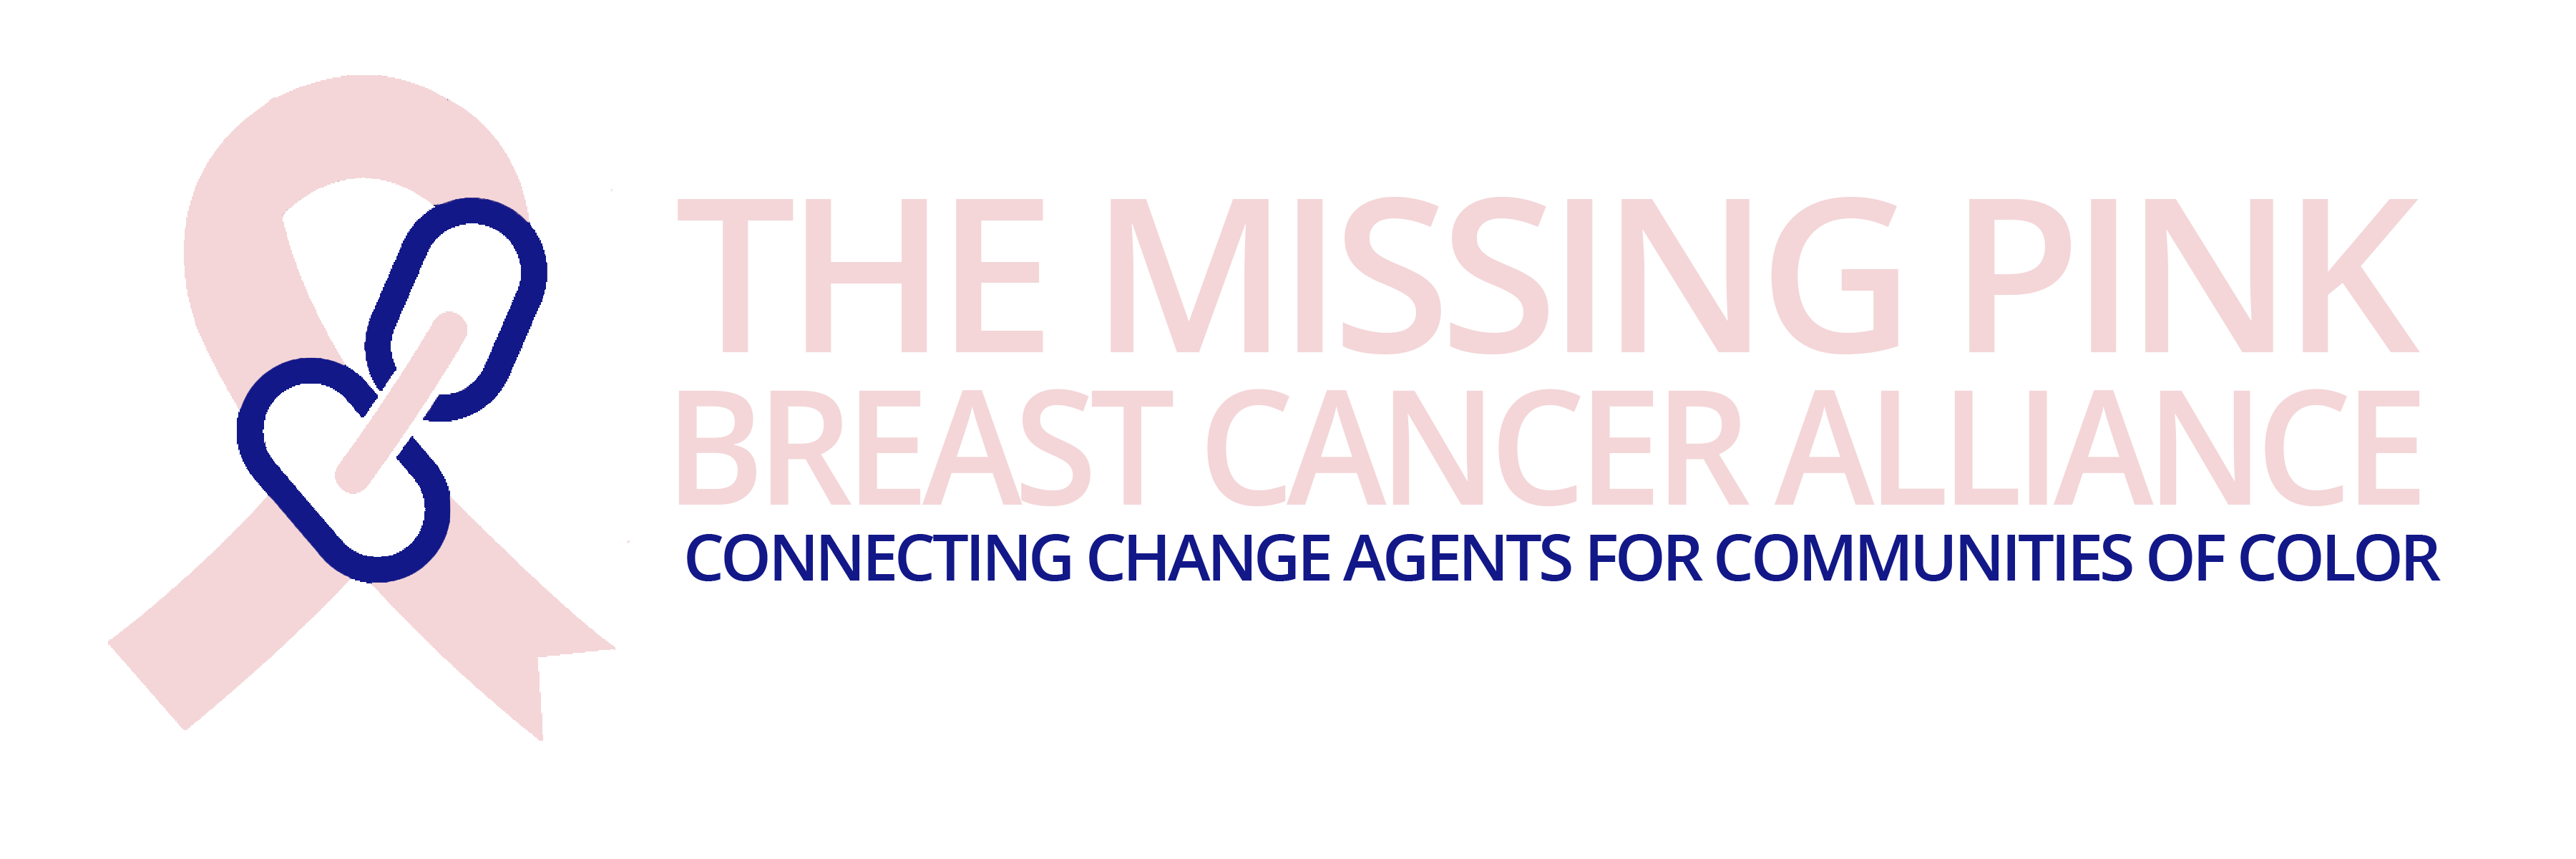 The Missing Pink BCA Logo Final